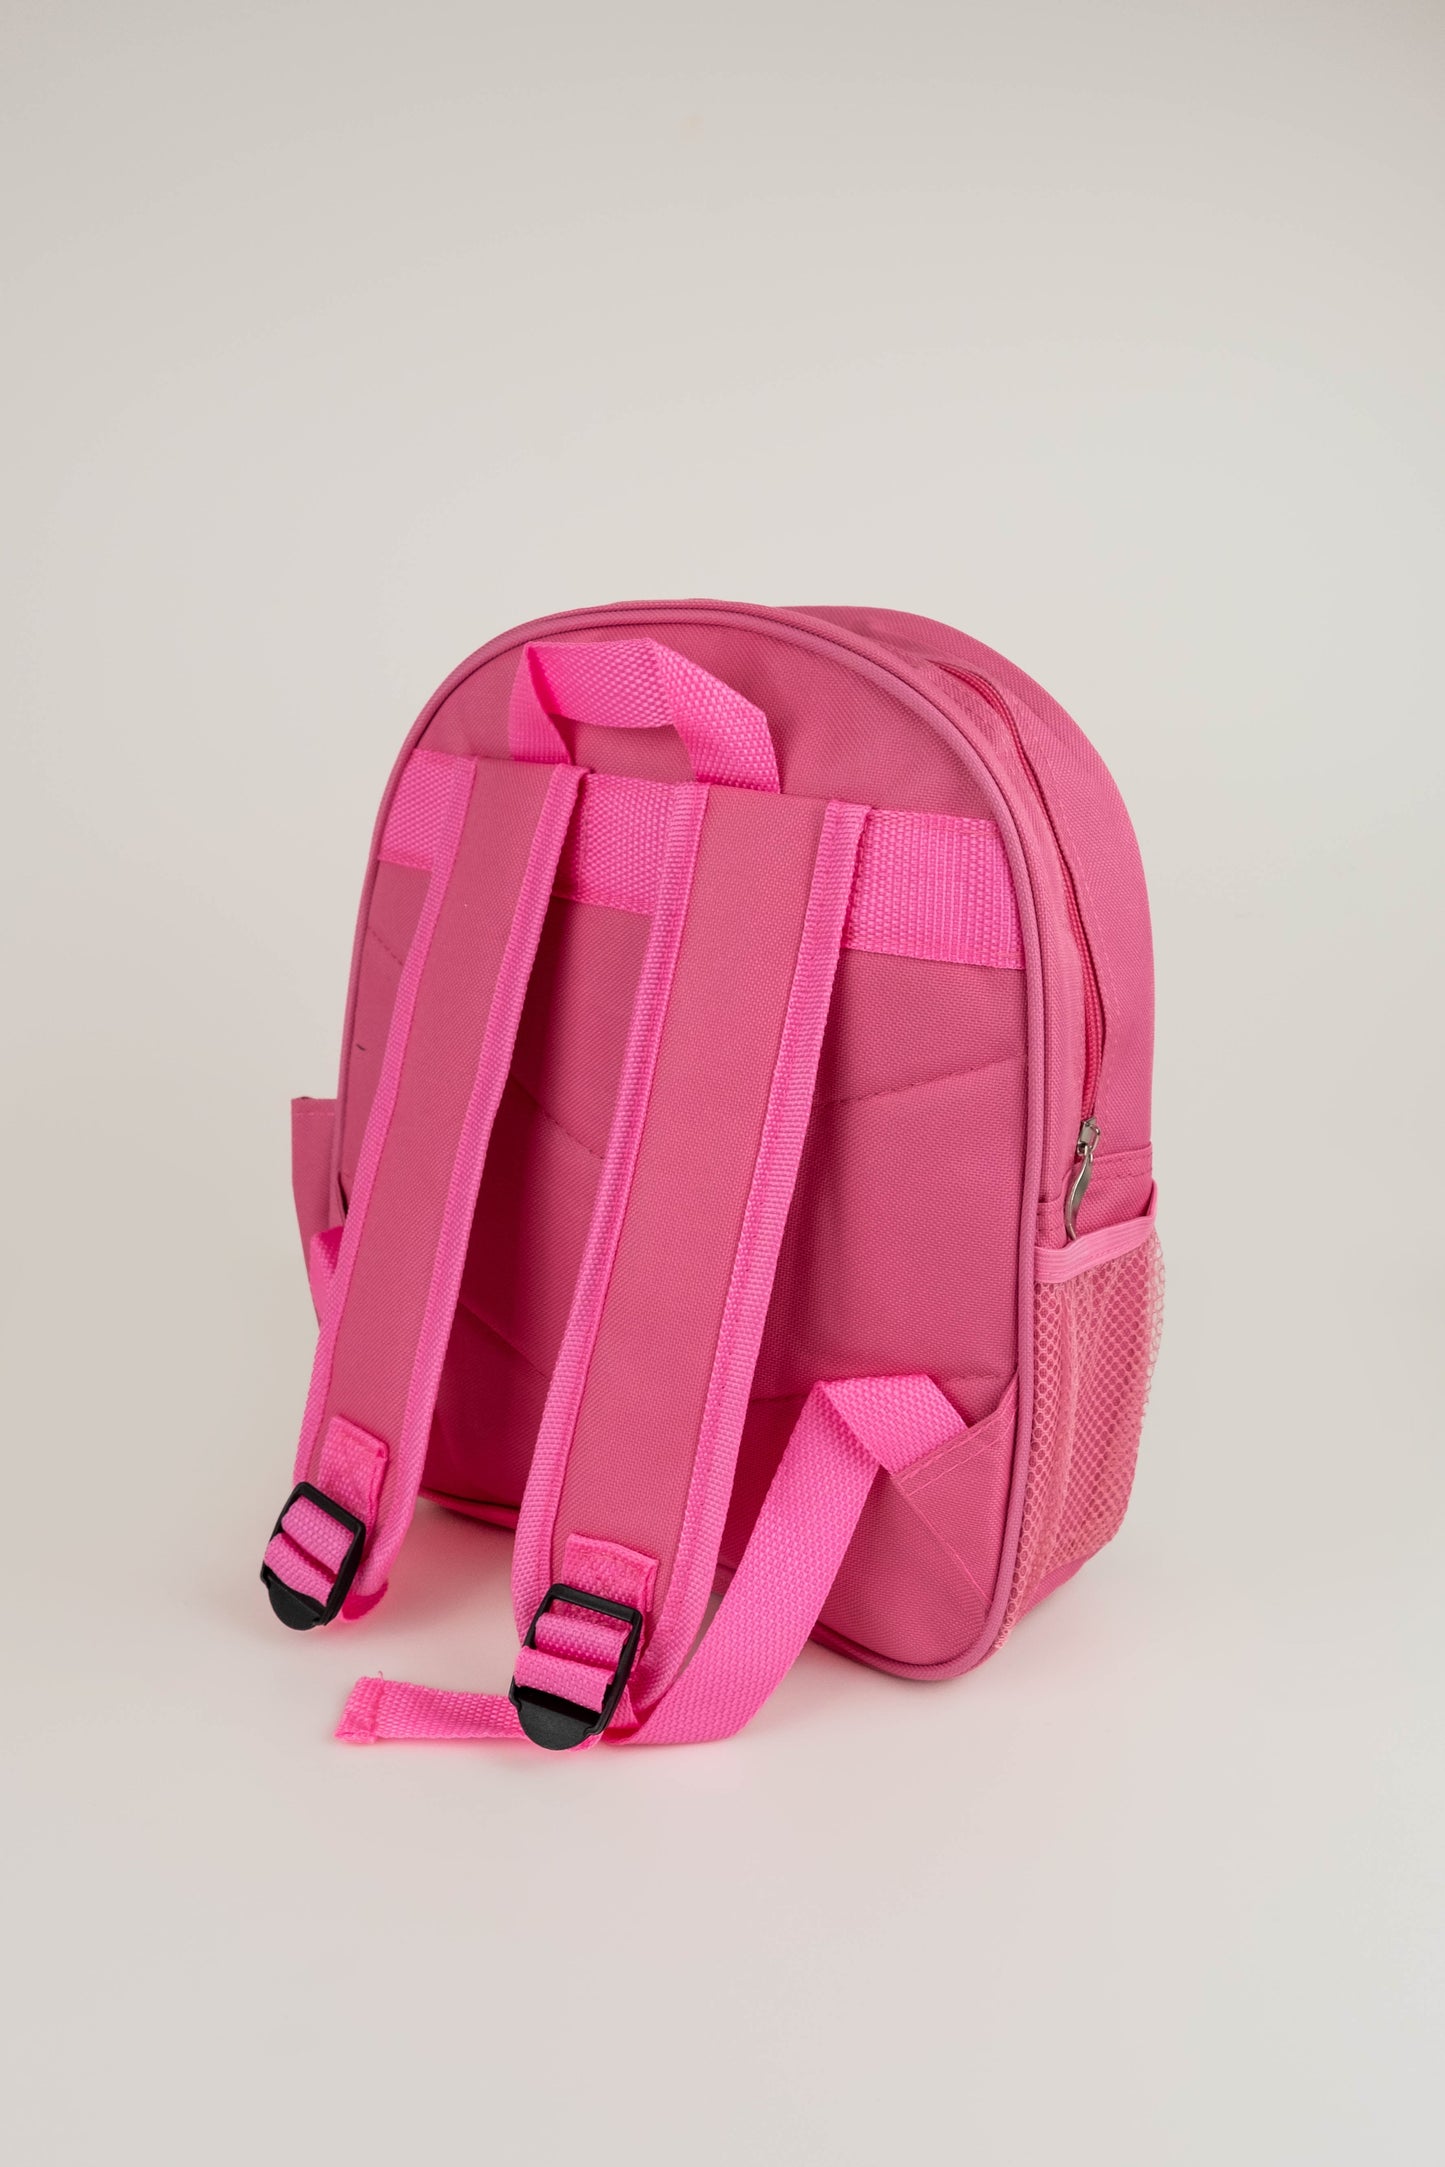 Children’s Personalised Backpack - Football Design